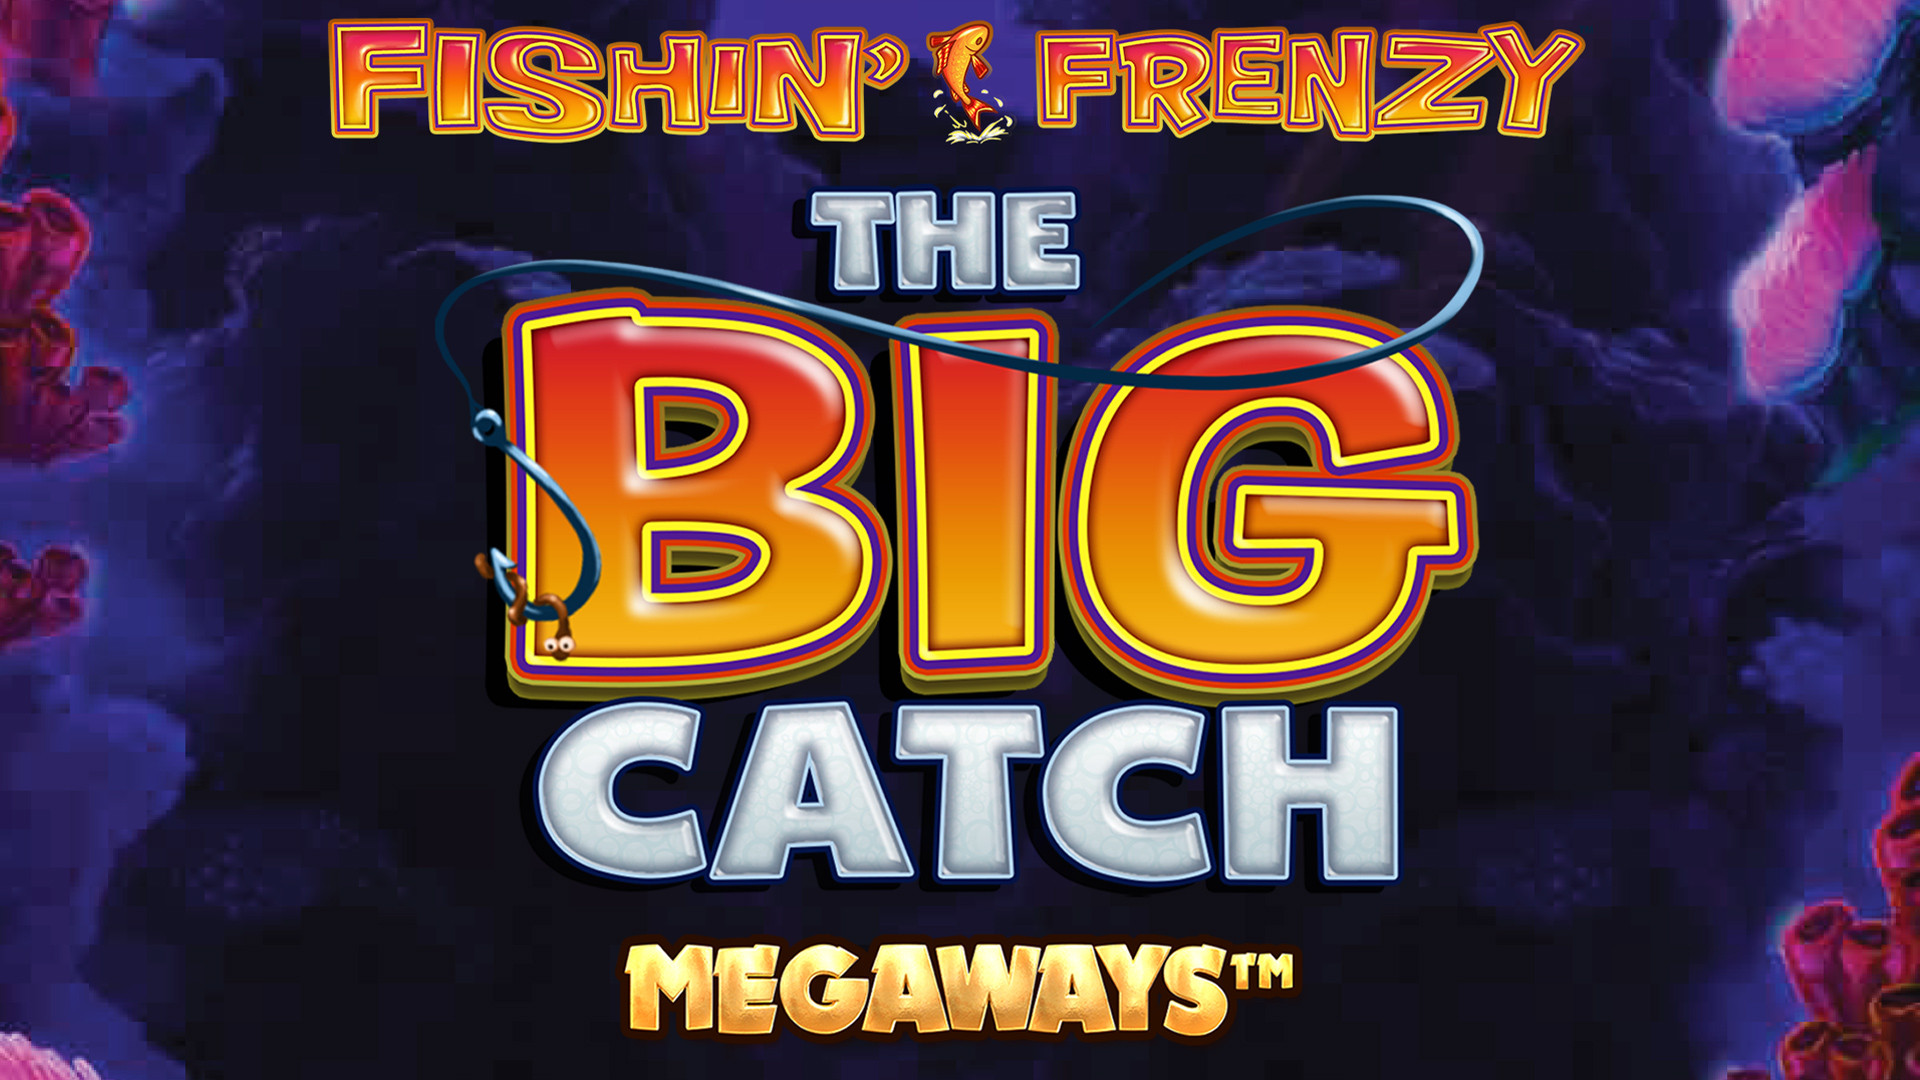 Fishin' Frenzy The Big Catch MEGAWAYS